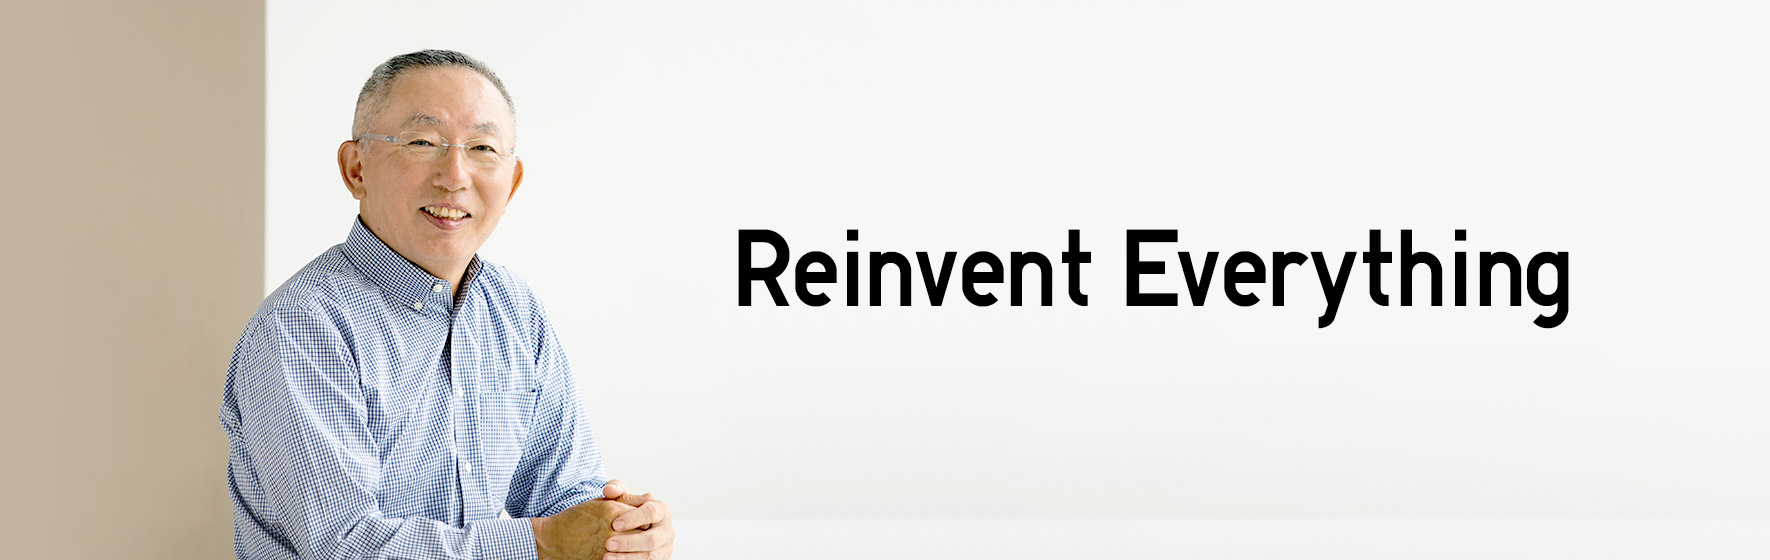 Reinvent Everything